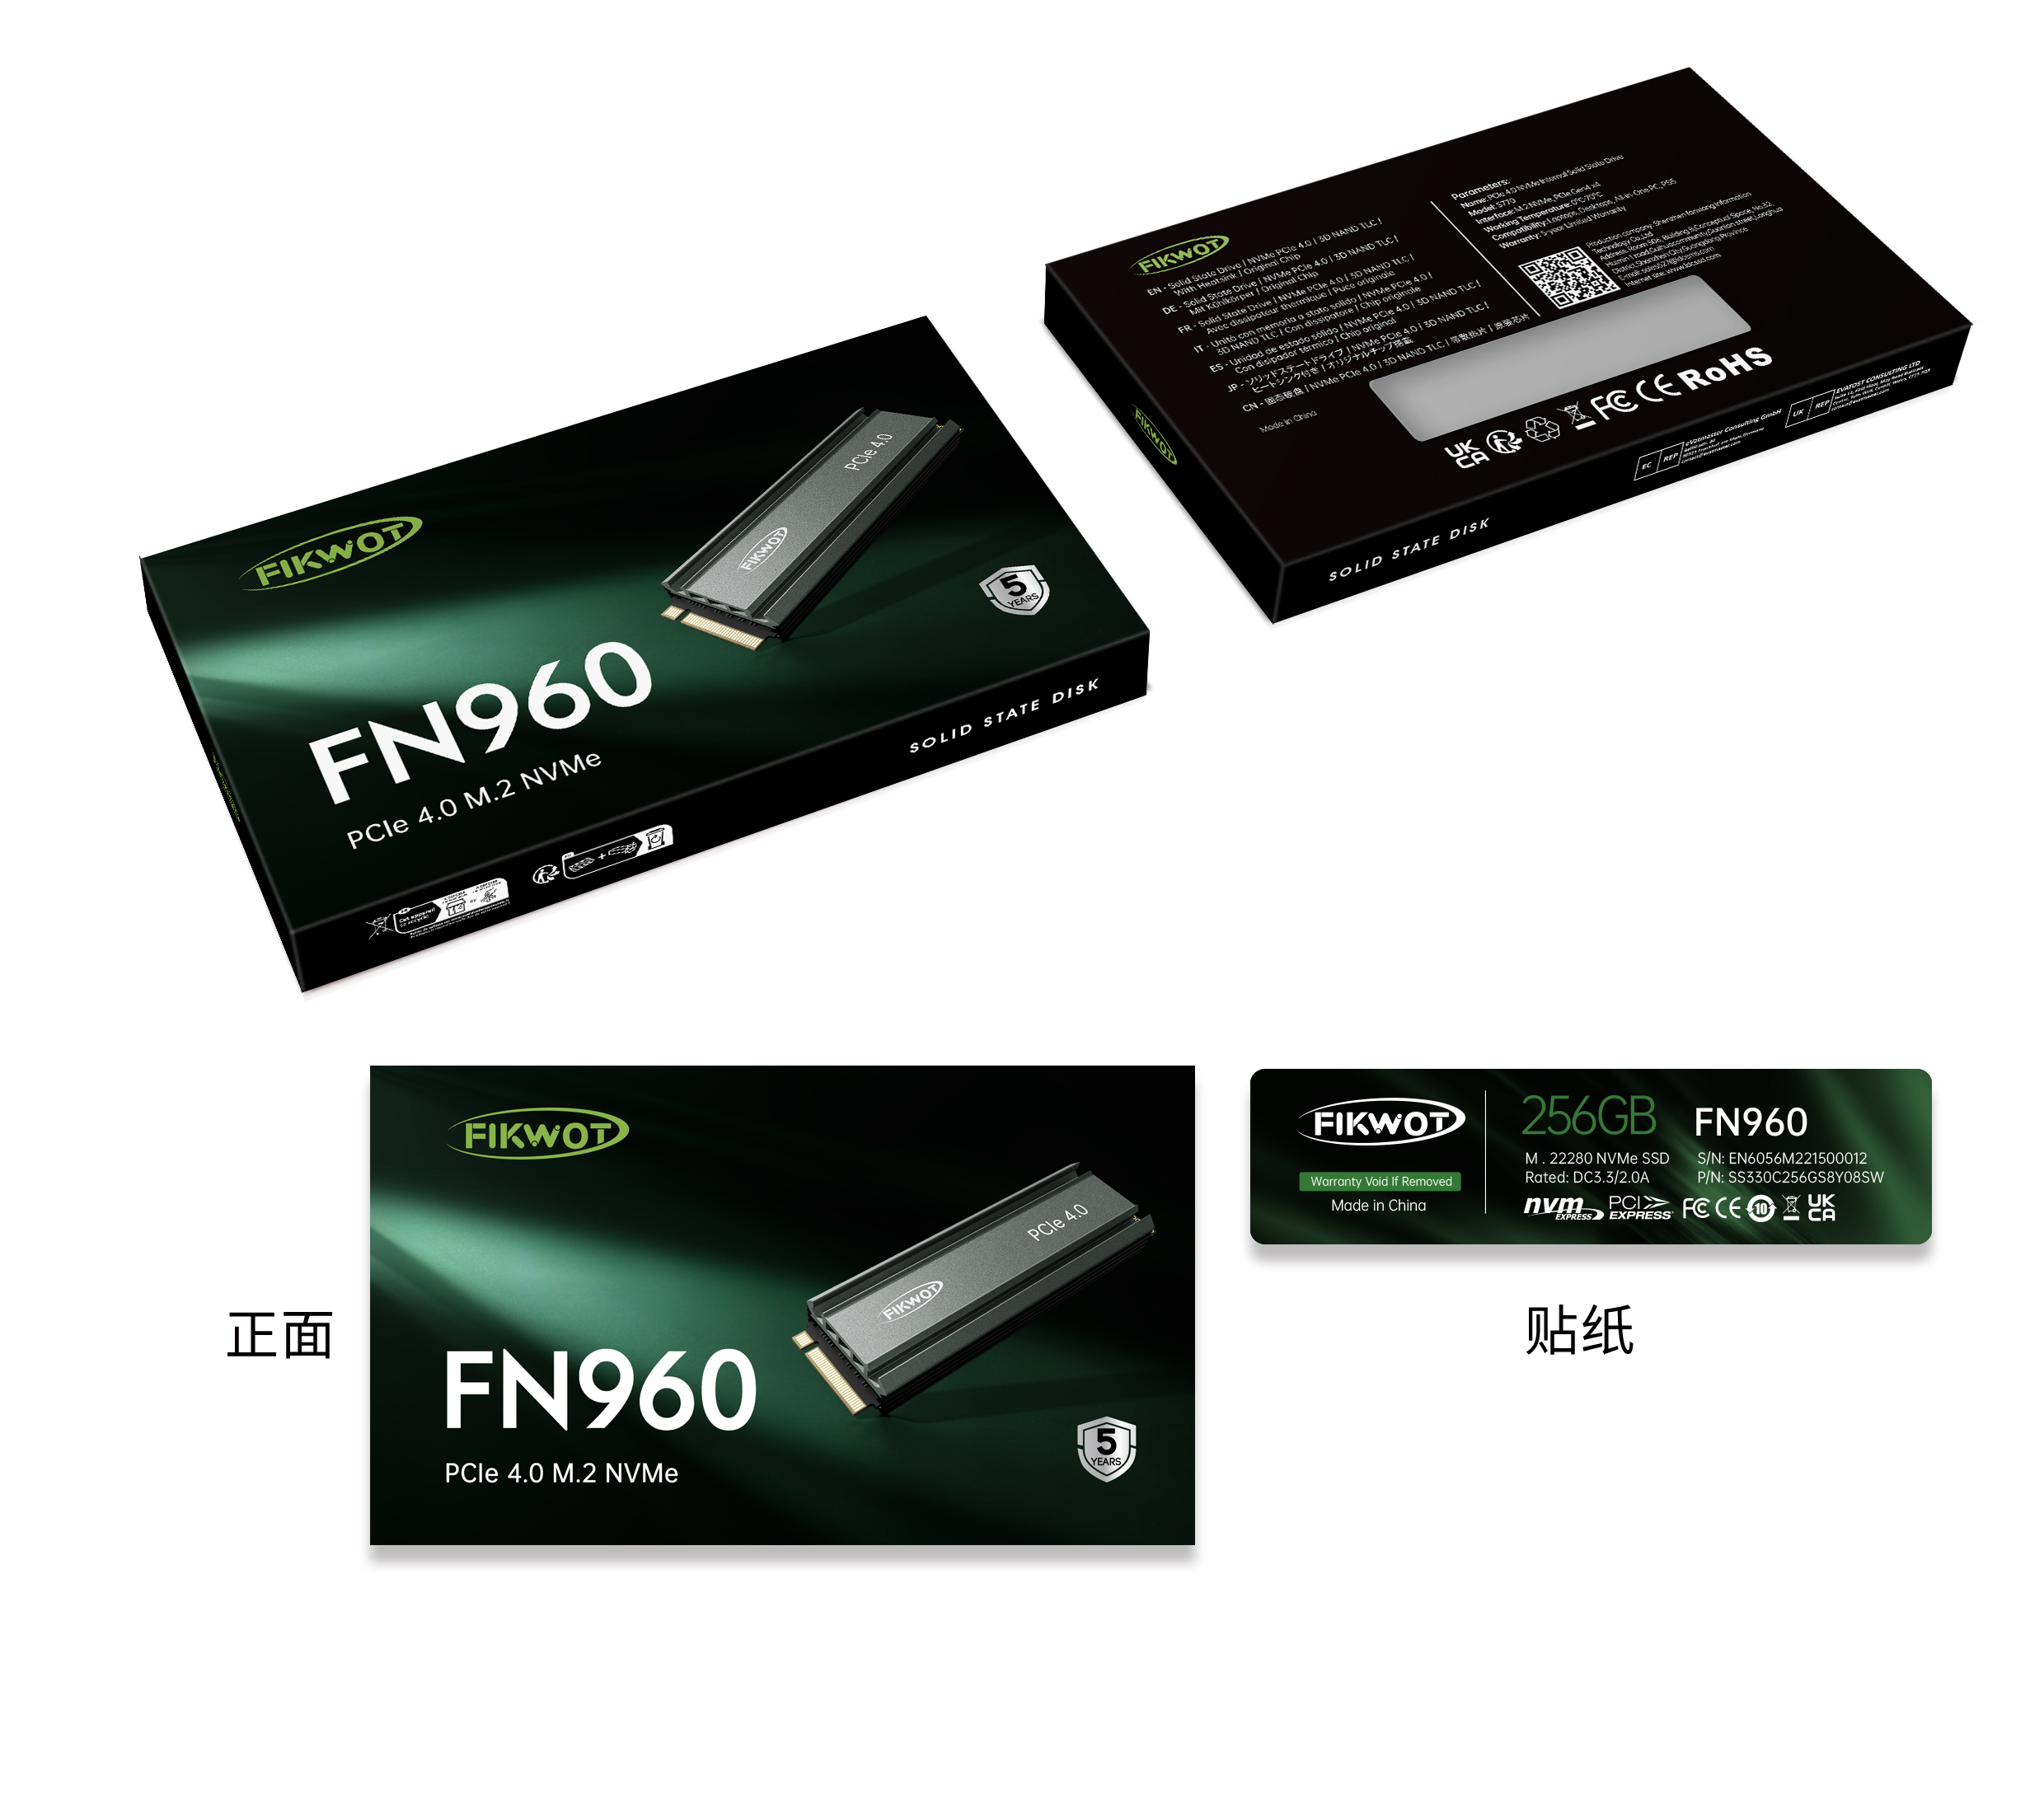 Fikwot FN960 M.2 2280 SSD PCIe Gen4 x4